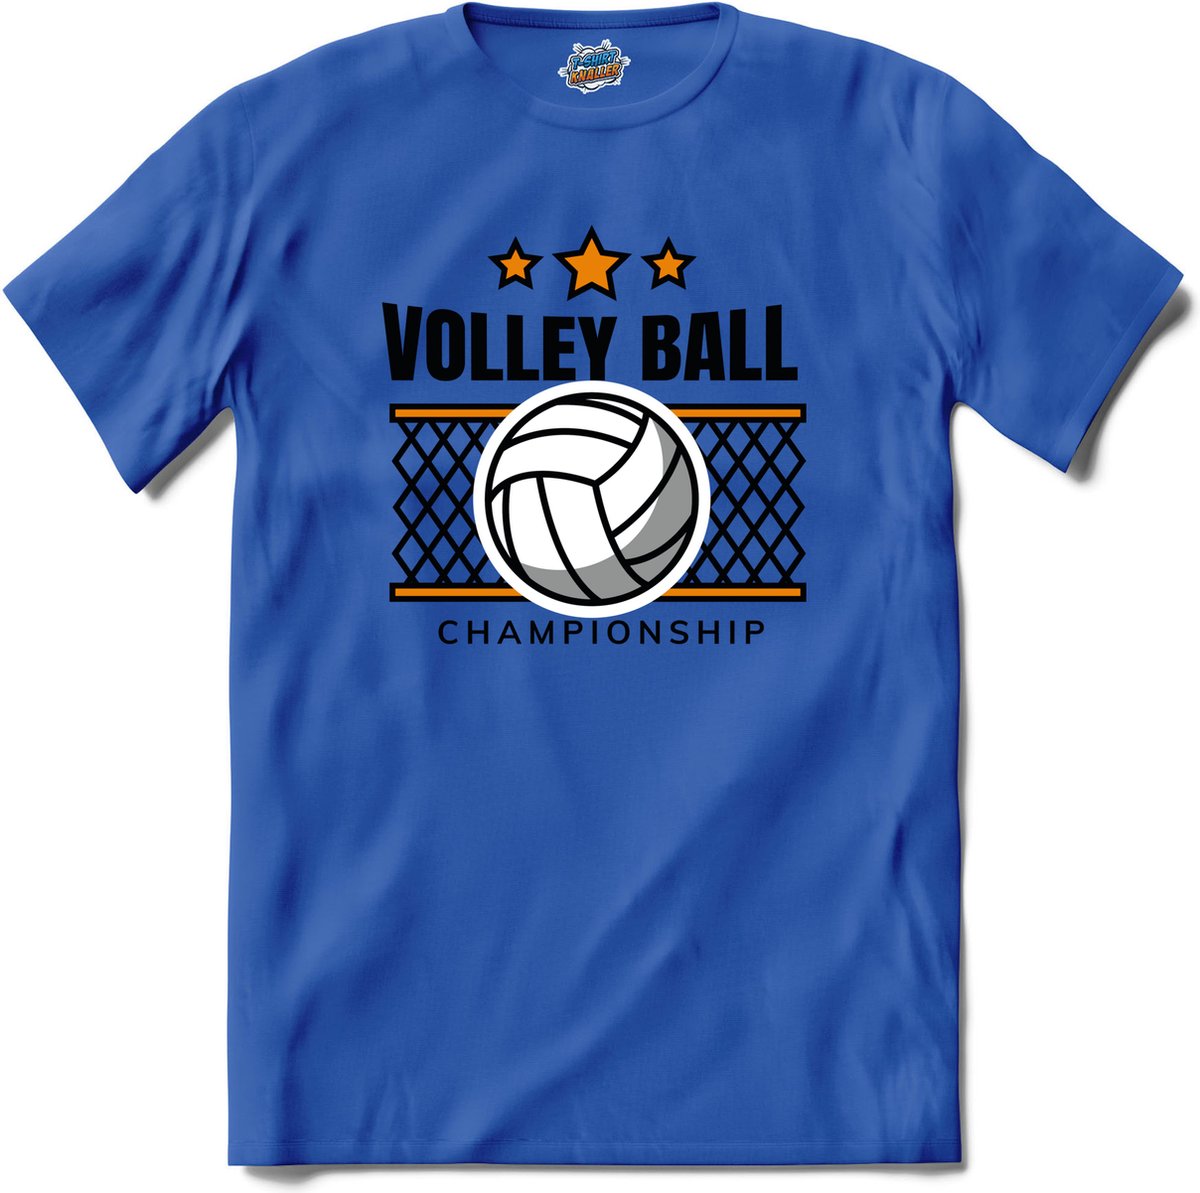 Volleybal net sport - T-Shirt - Meisjes - Royal Blue - Maat 6 jaar